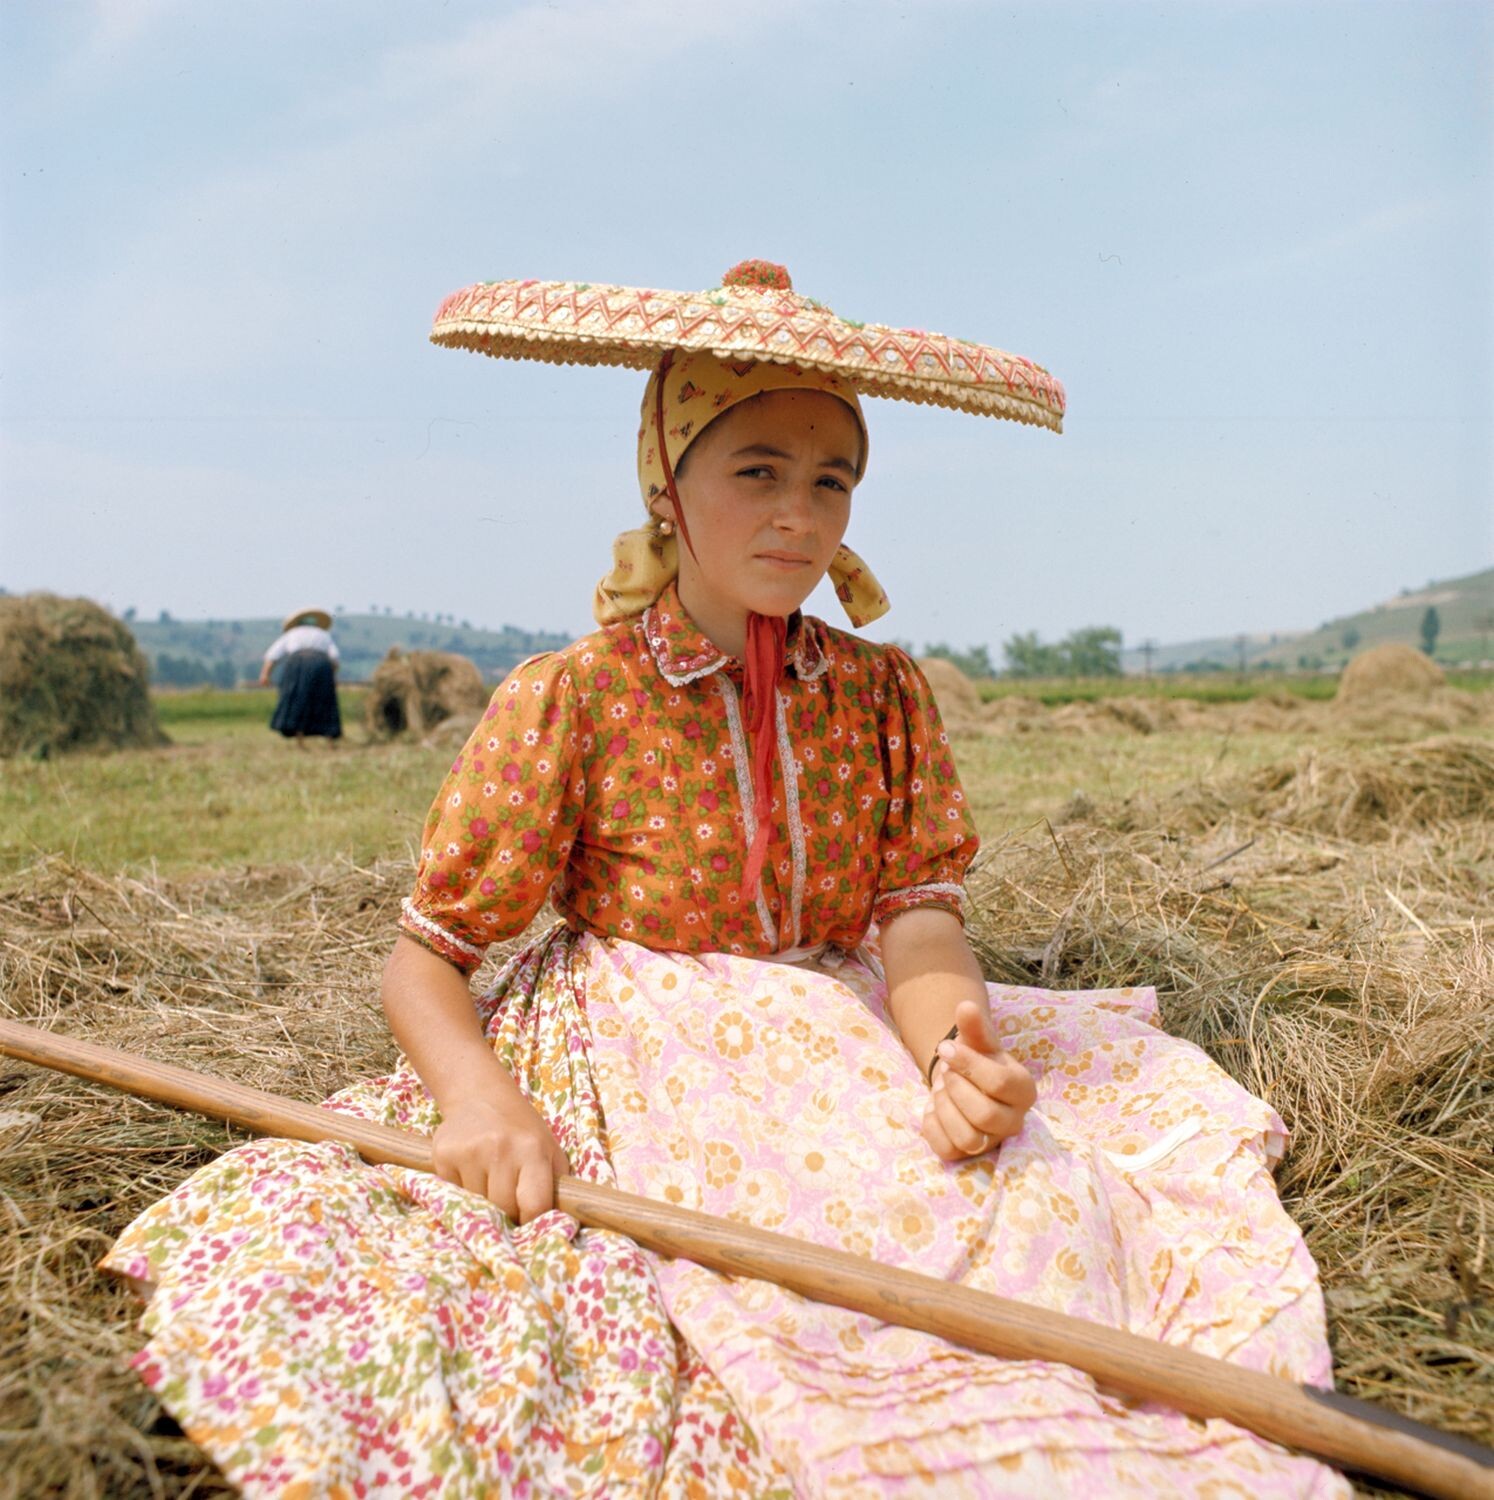 Девушка, ворошащая сено, 1974. Фотограф Петер Корниш